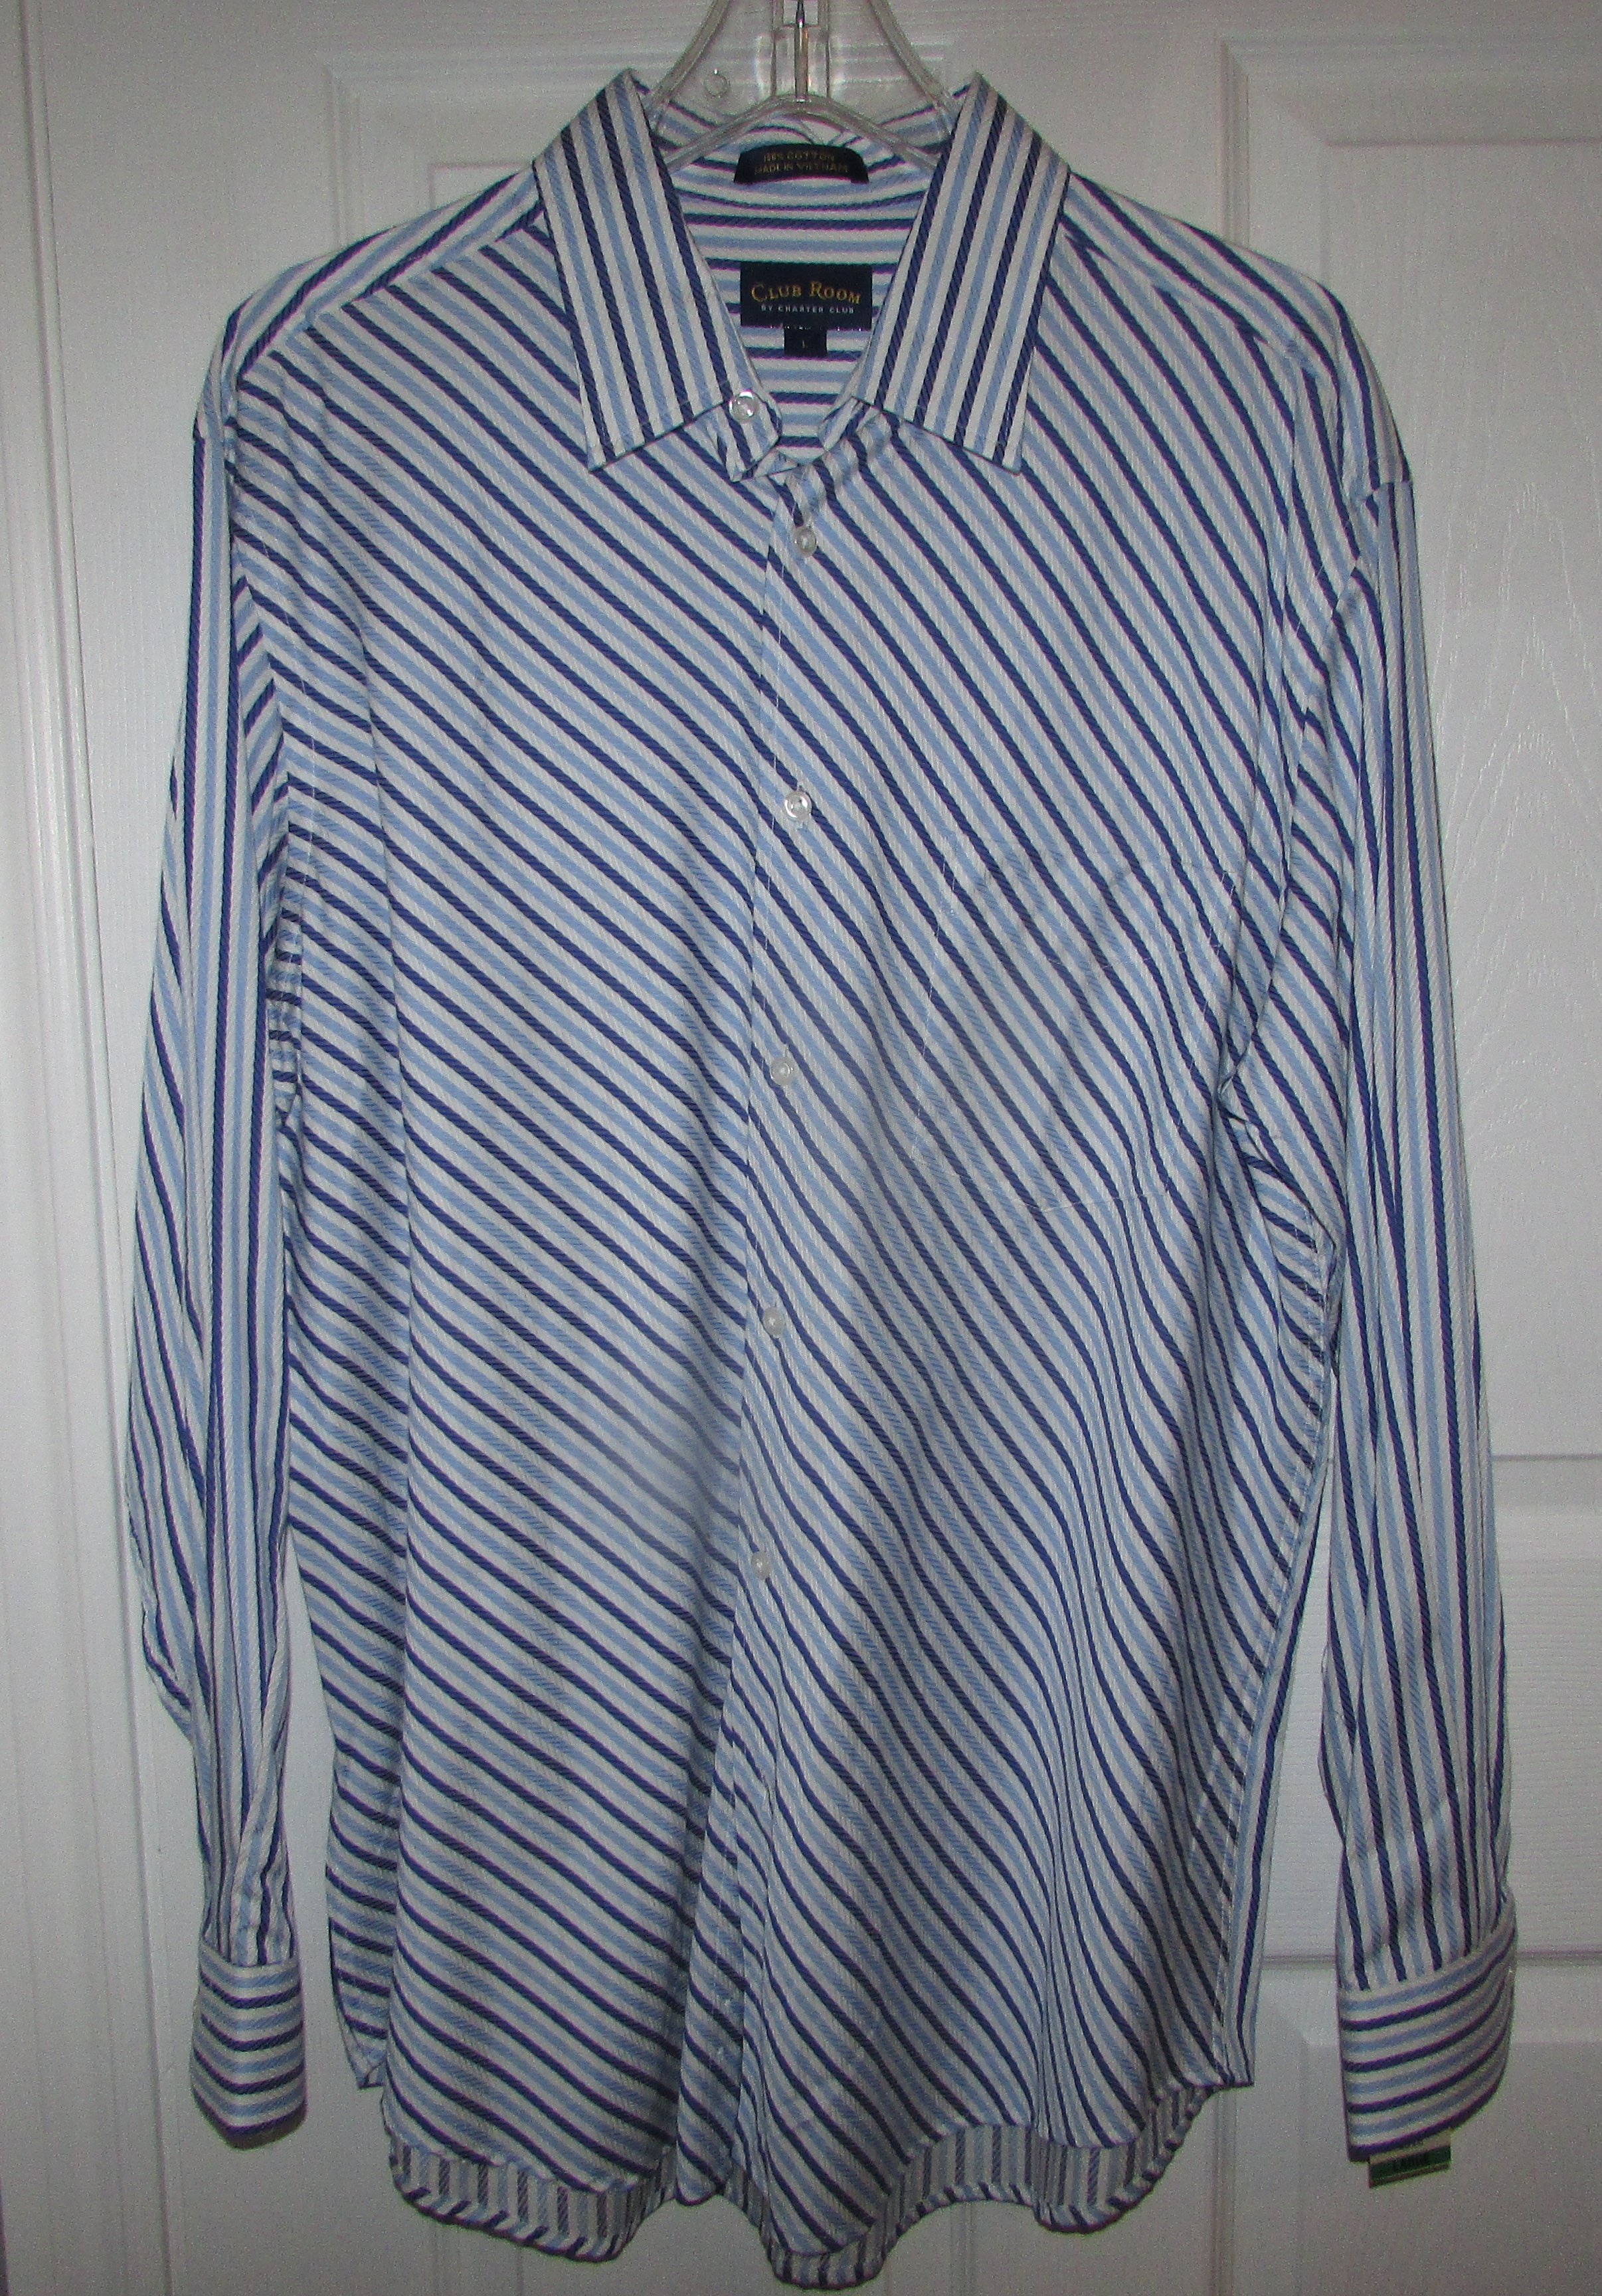 CHARTER CLUB CLUB ROOM Trendy Striped Shirt - Mens Large